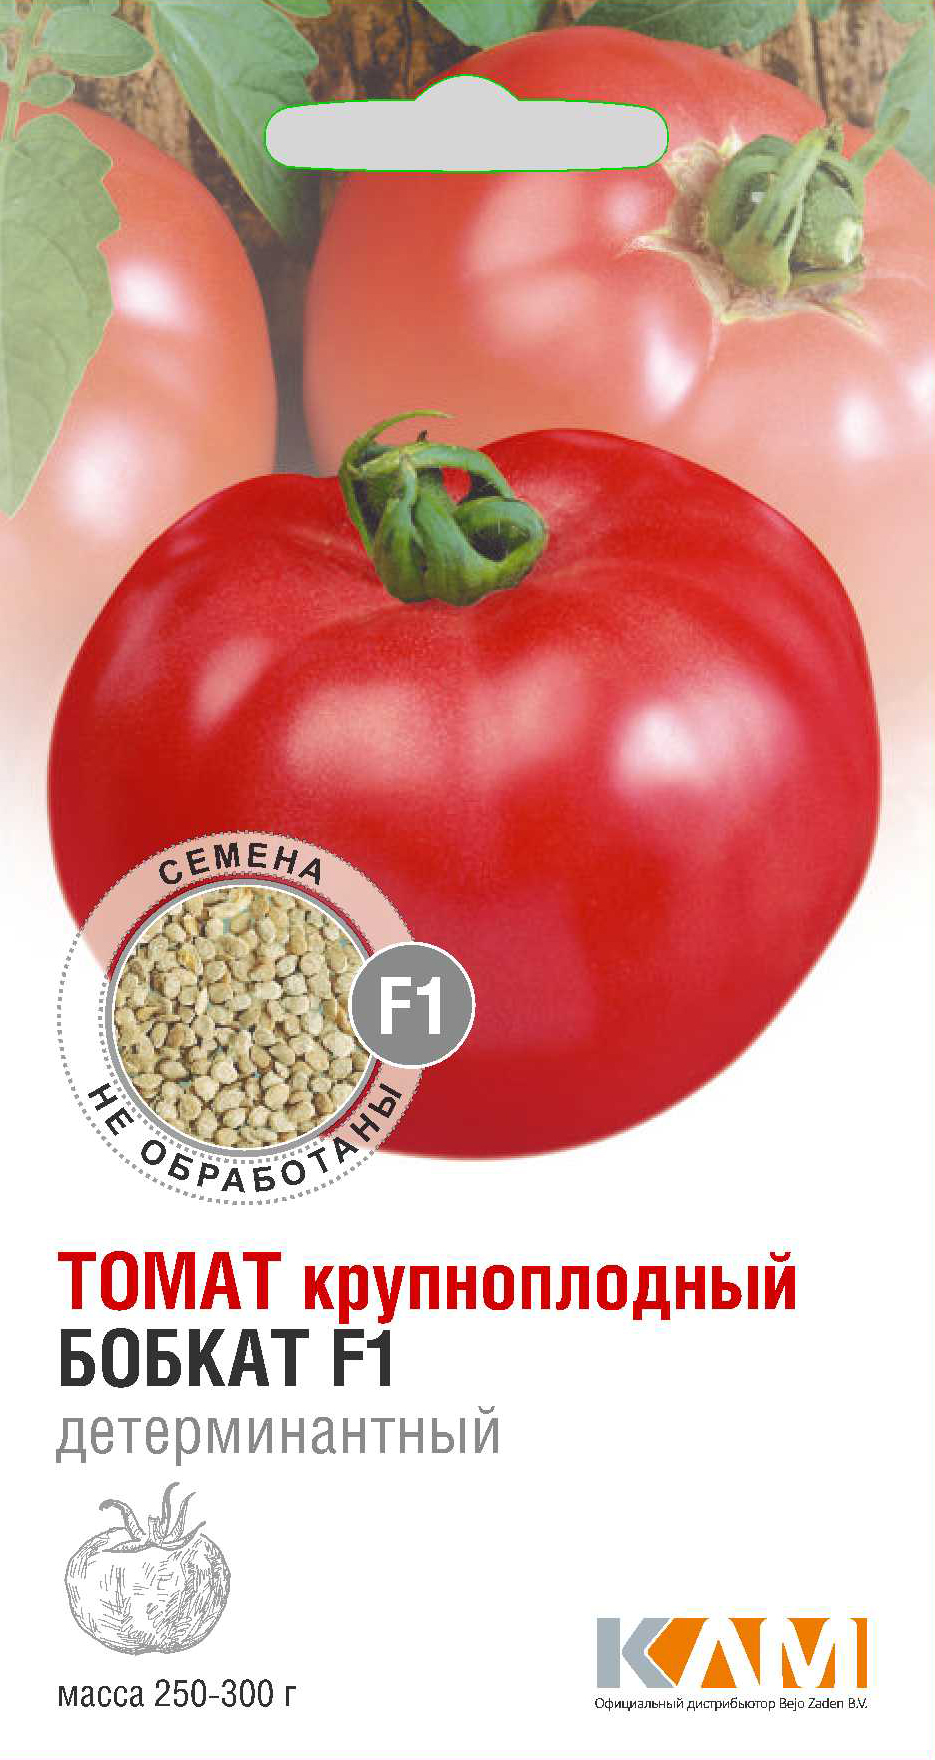 Урожайность томата бобкат. Томат Бобкат f1. Семена томат Бобкат f1 10 шт. Бобкат f1 томат характеристика.